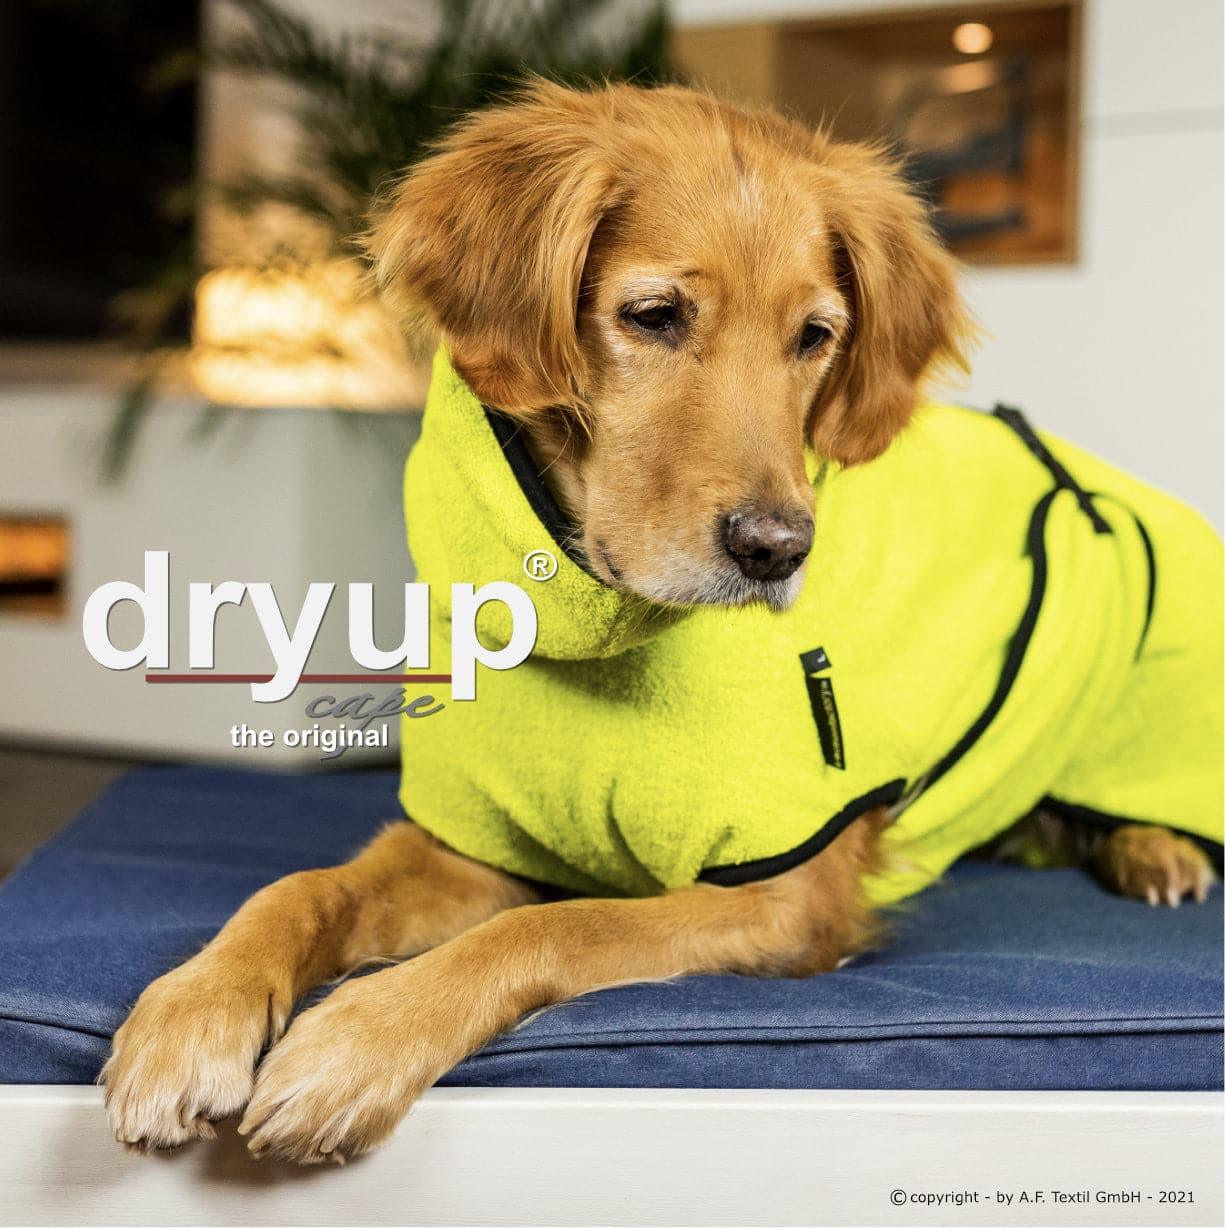 Dryup Cape - Action Factory - Art:Bademantel, Tierart:Hund - Marigin AG Onlineshop für Tierbedarf